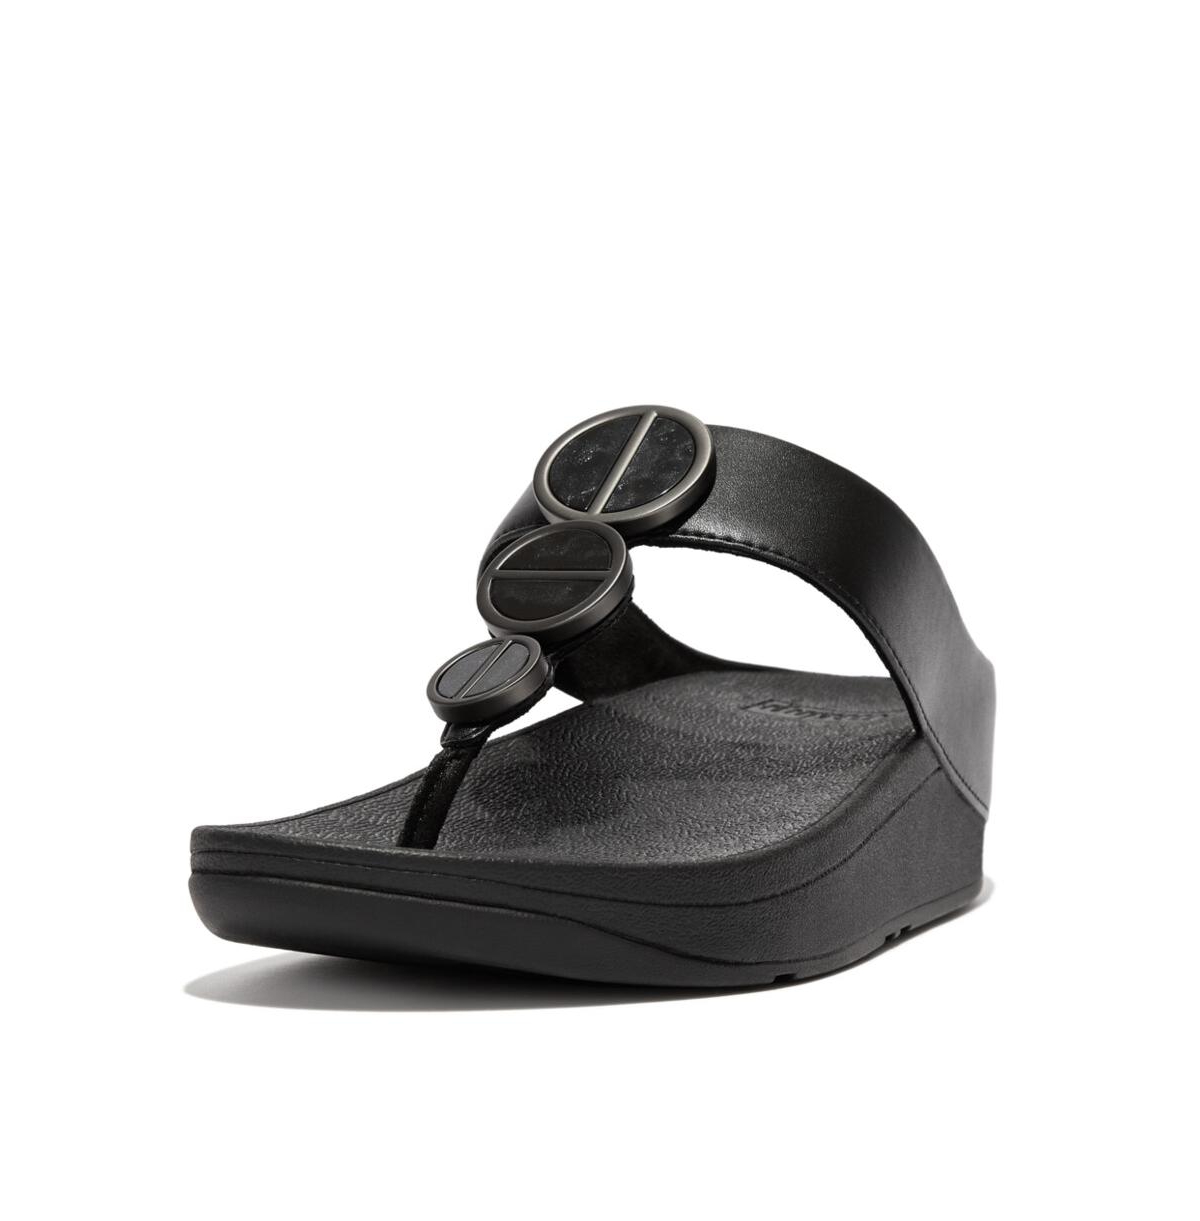 FitFlop Women's Halo Metallic Trim Toe Post Sandals Women's Shoes